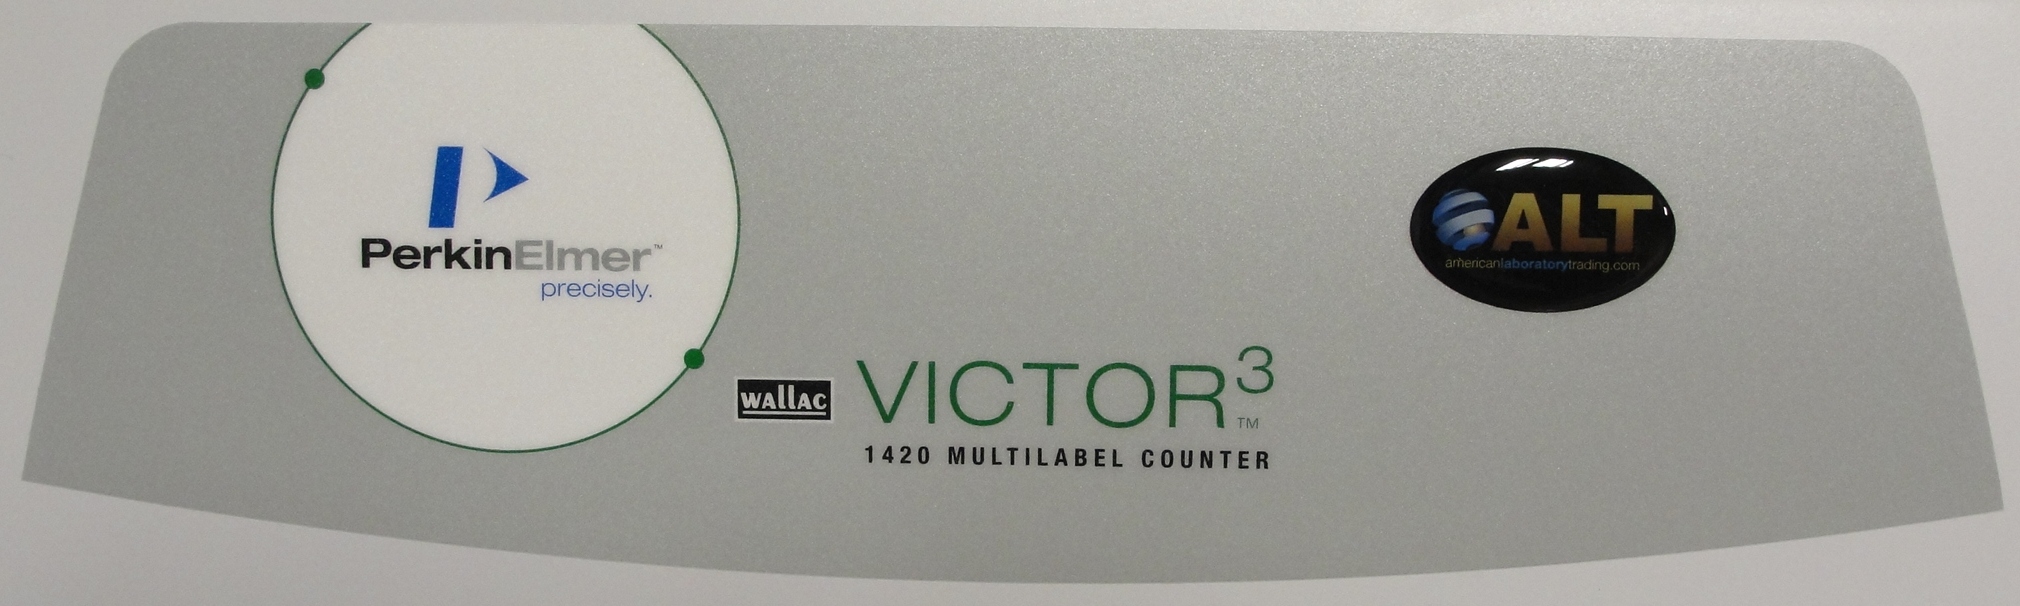 wallac 1420 victor 2 manual